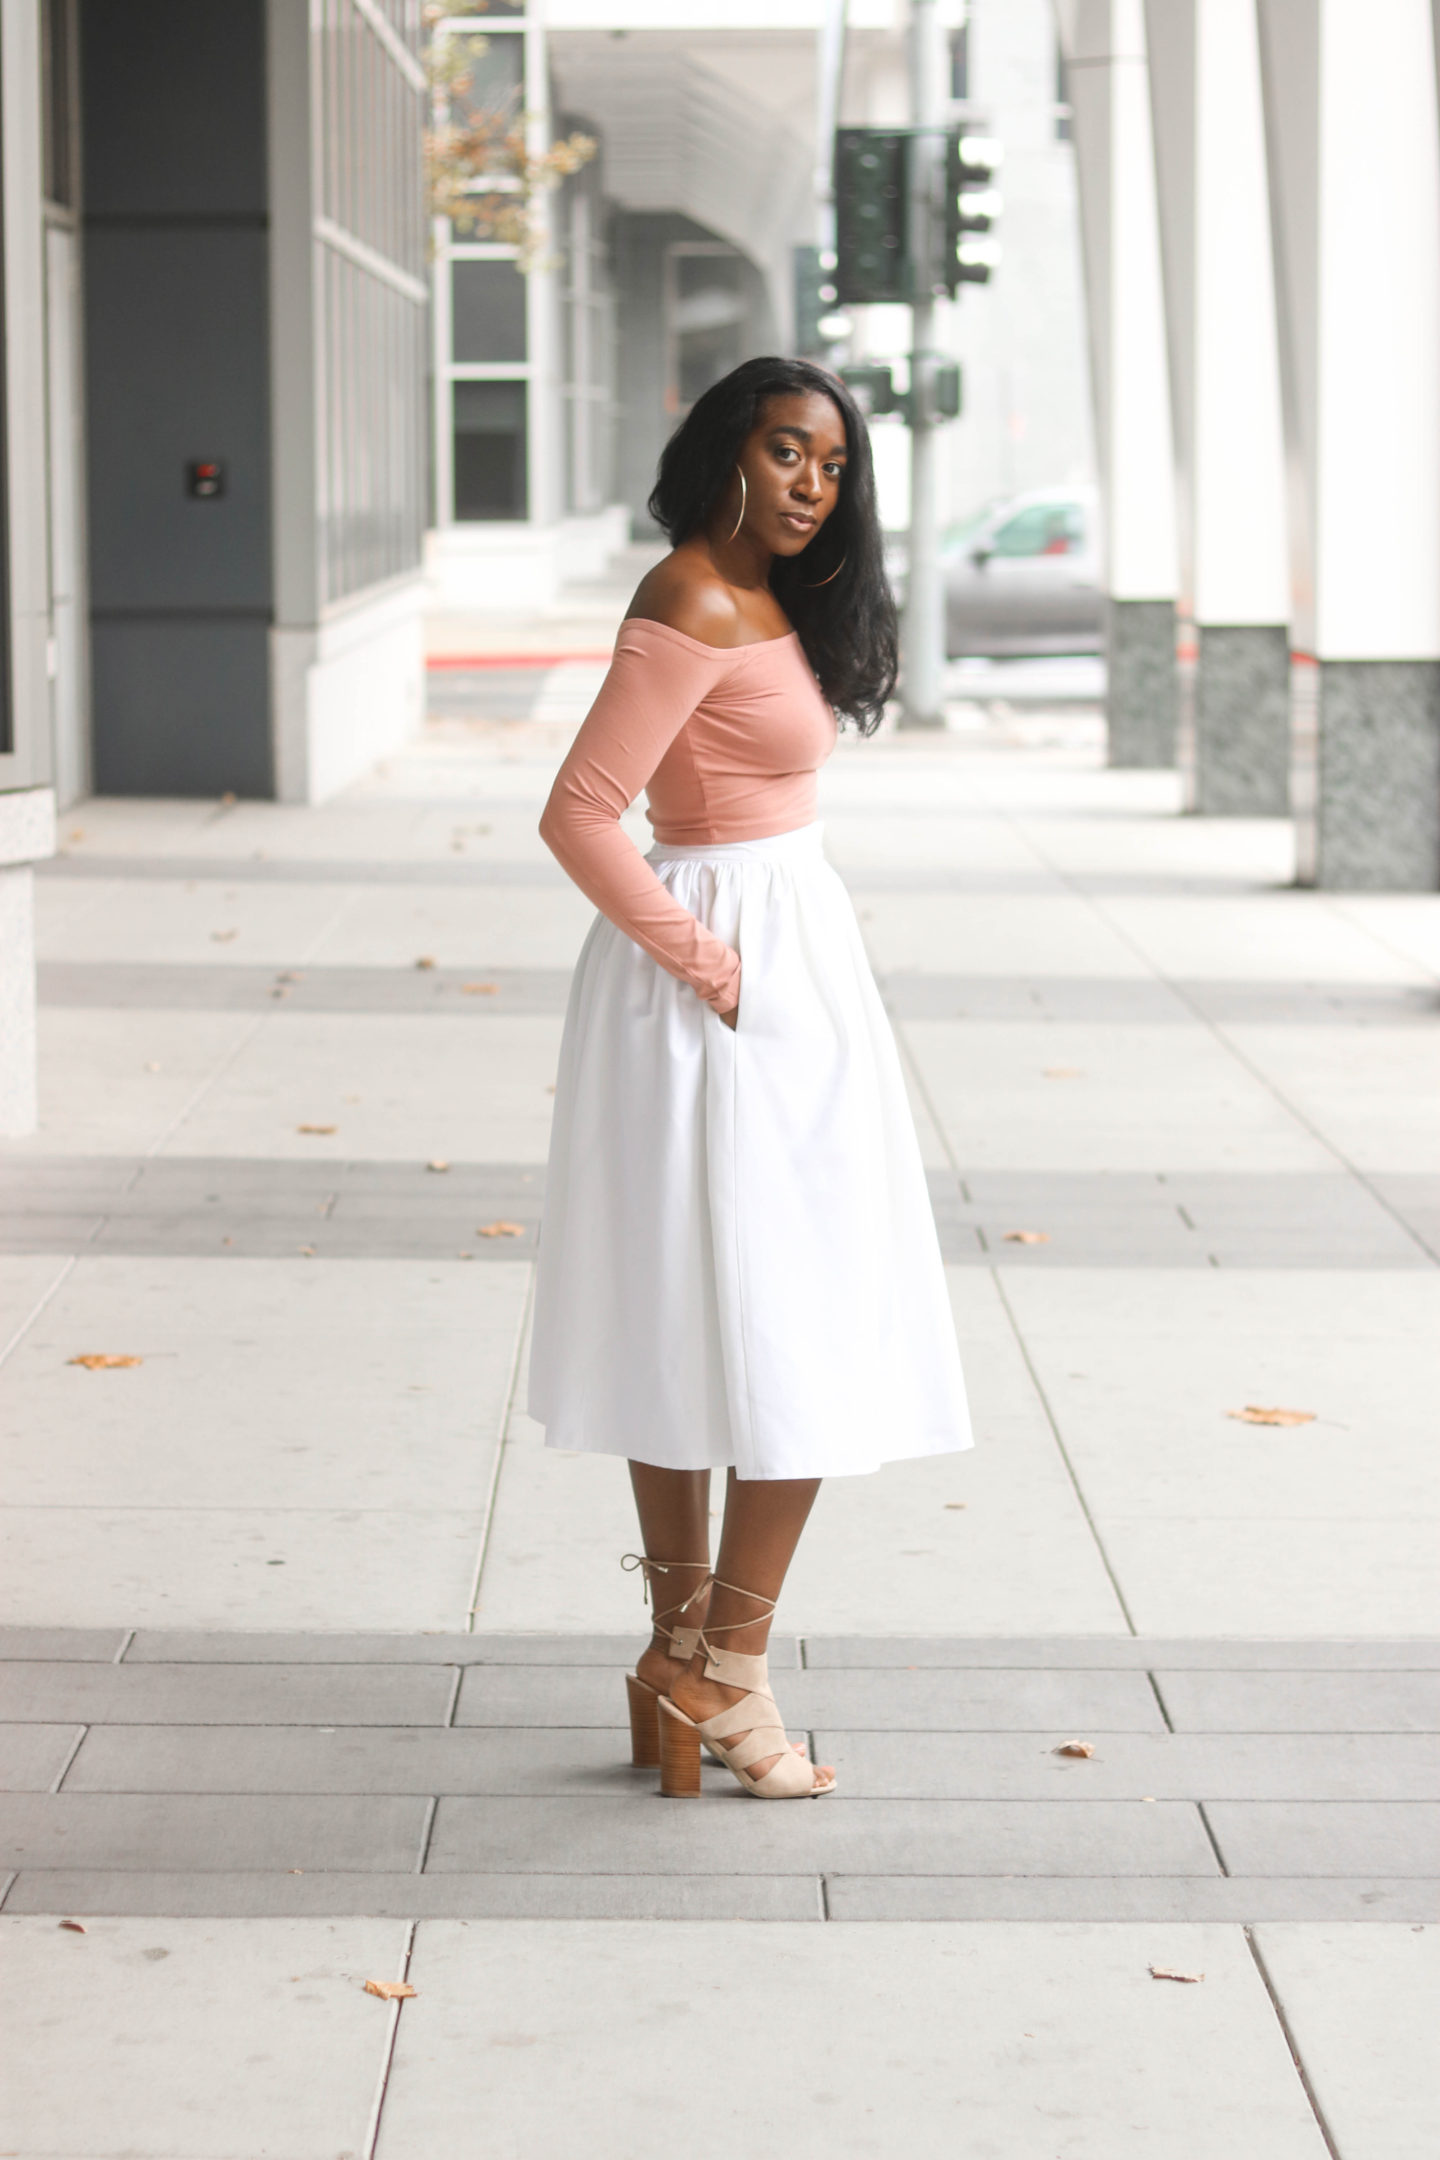 DIY White Denim Gathered Midi Skirt Tutorial , Sewing For Beginners, Sewing Tutorials, Skirt Tutorials, White Denim Skirt, DIY Fashion, Midi Skirt, Gathered skirt with pockets